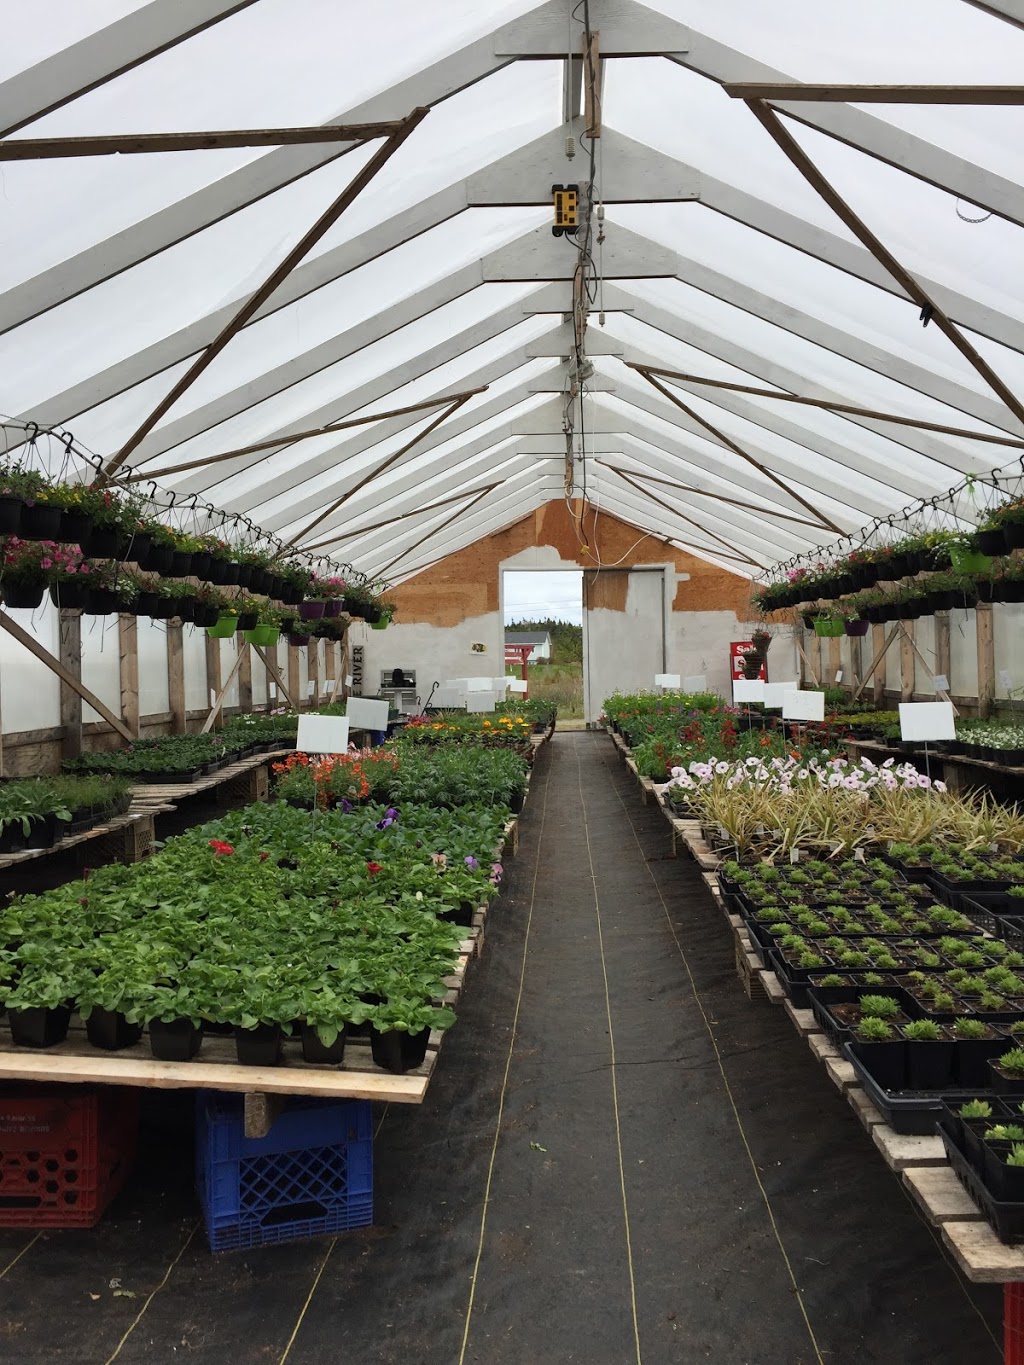 Hodge River Nursery | florist | 89 Markland Rd, Whitbourne, NL A0B 3K0, Canada | 7096908724 OR +1 709-690-8724